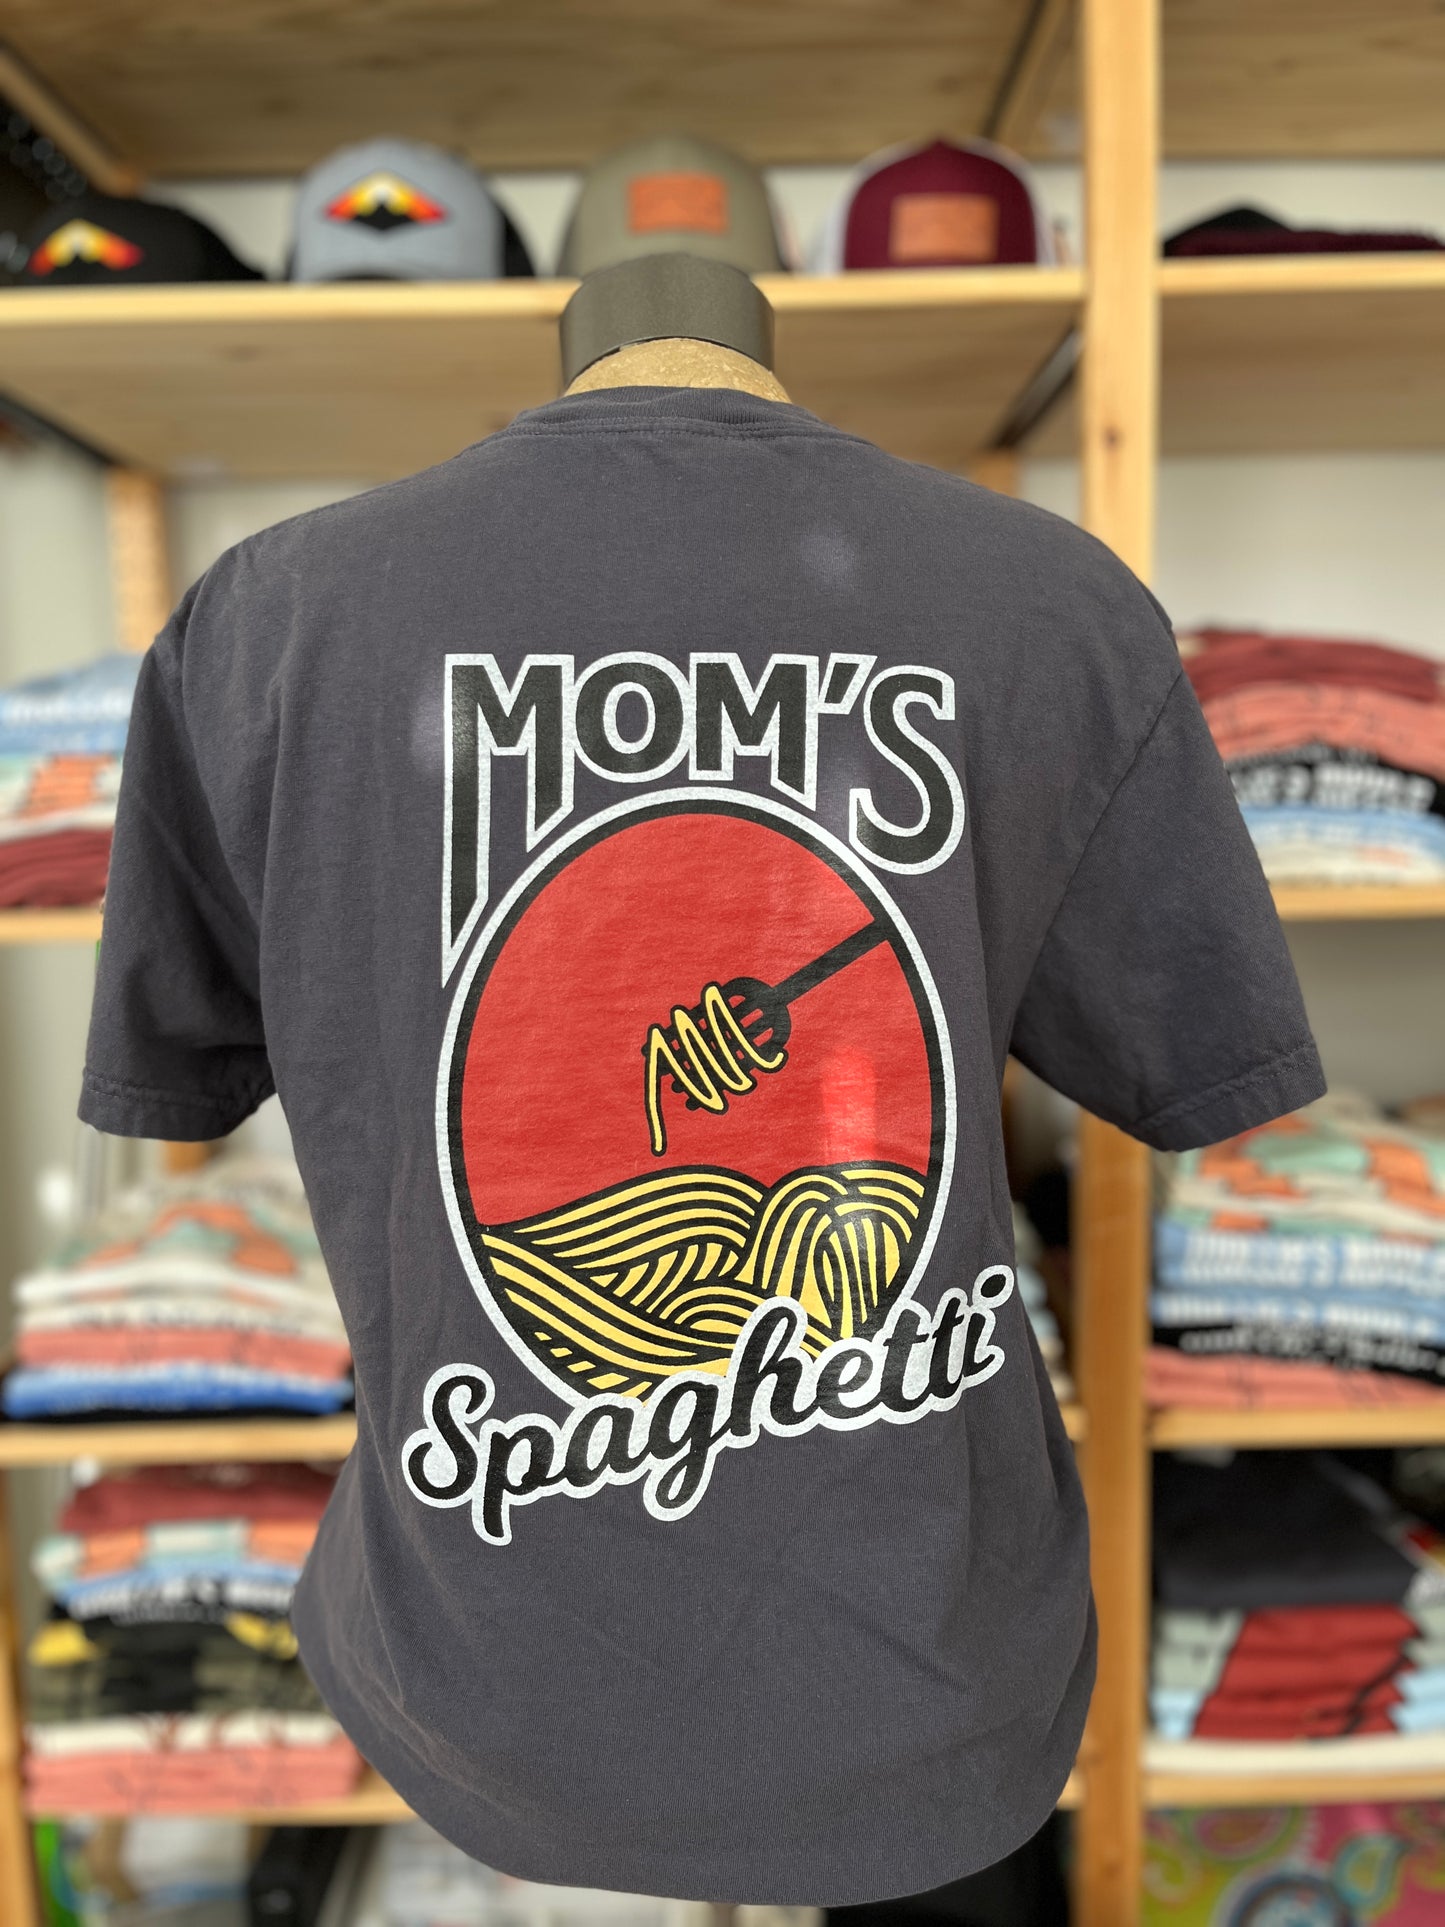 Mom’s Spaghetti T-shirt